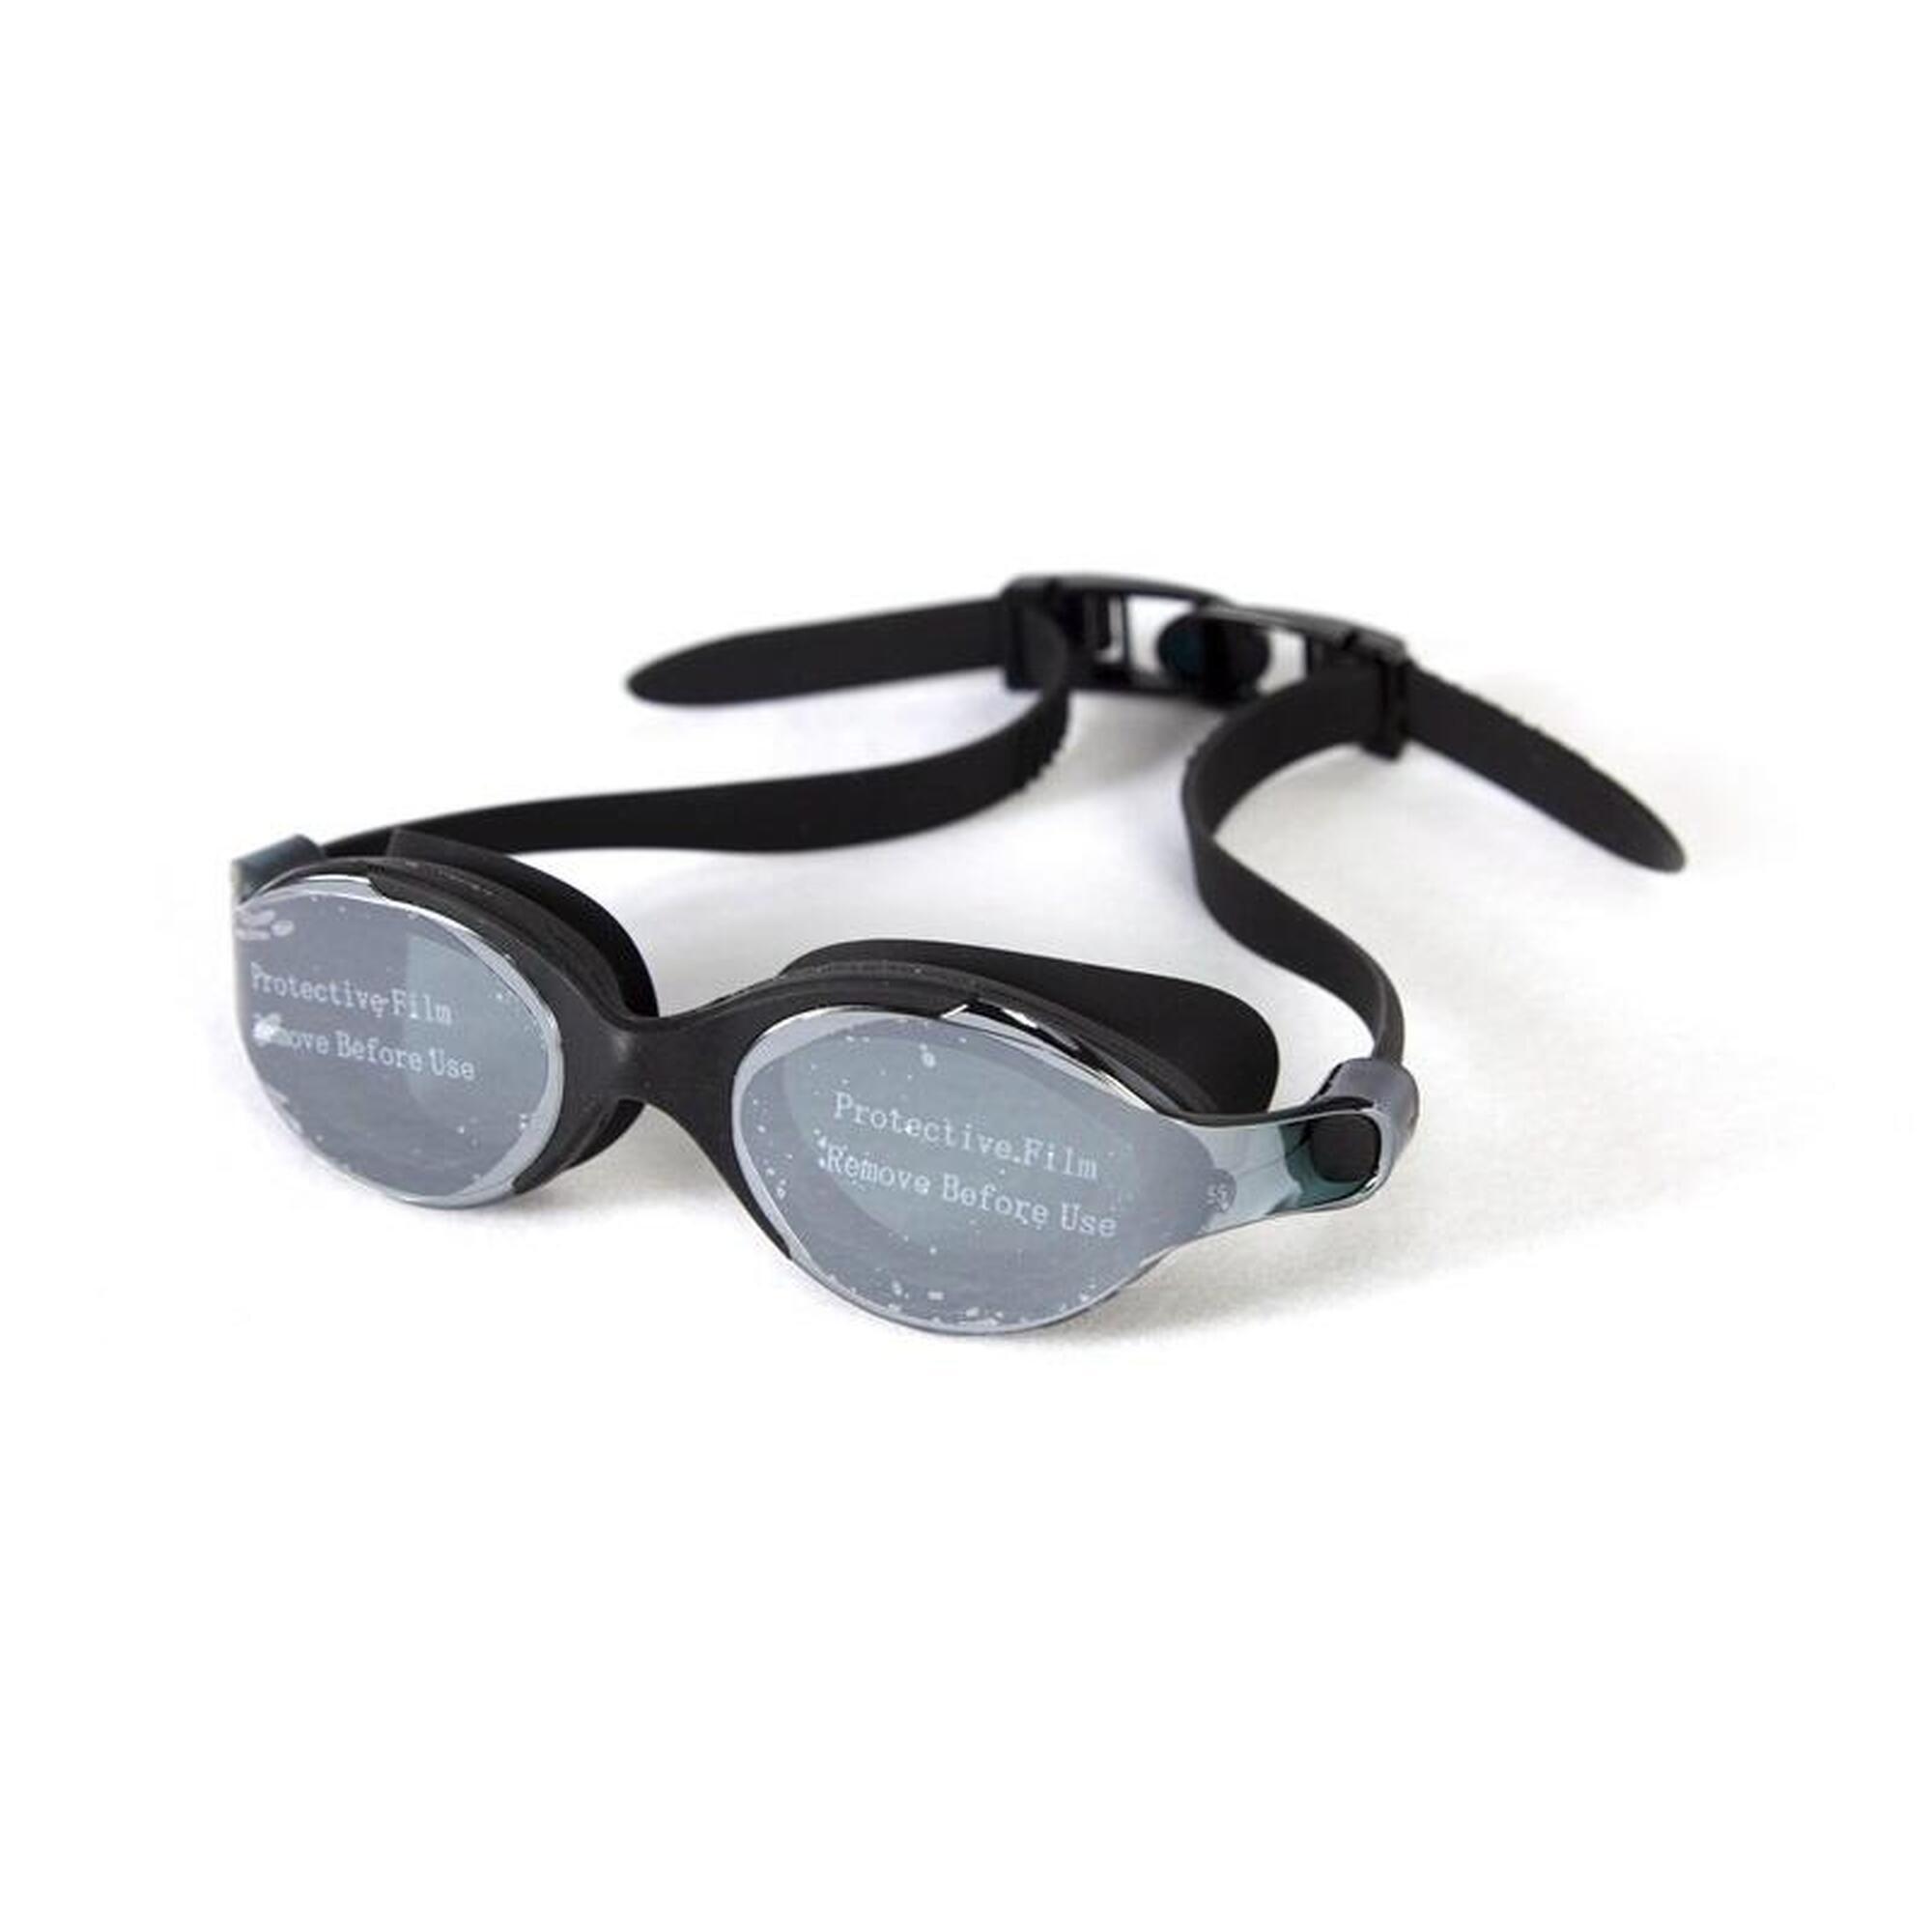 MS-9500 Silicone Anti-Fog UV Protection Optical Swimming Goggles - Black/Silver